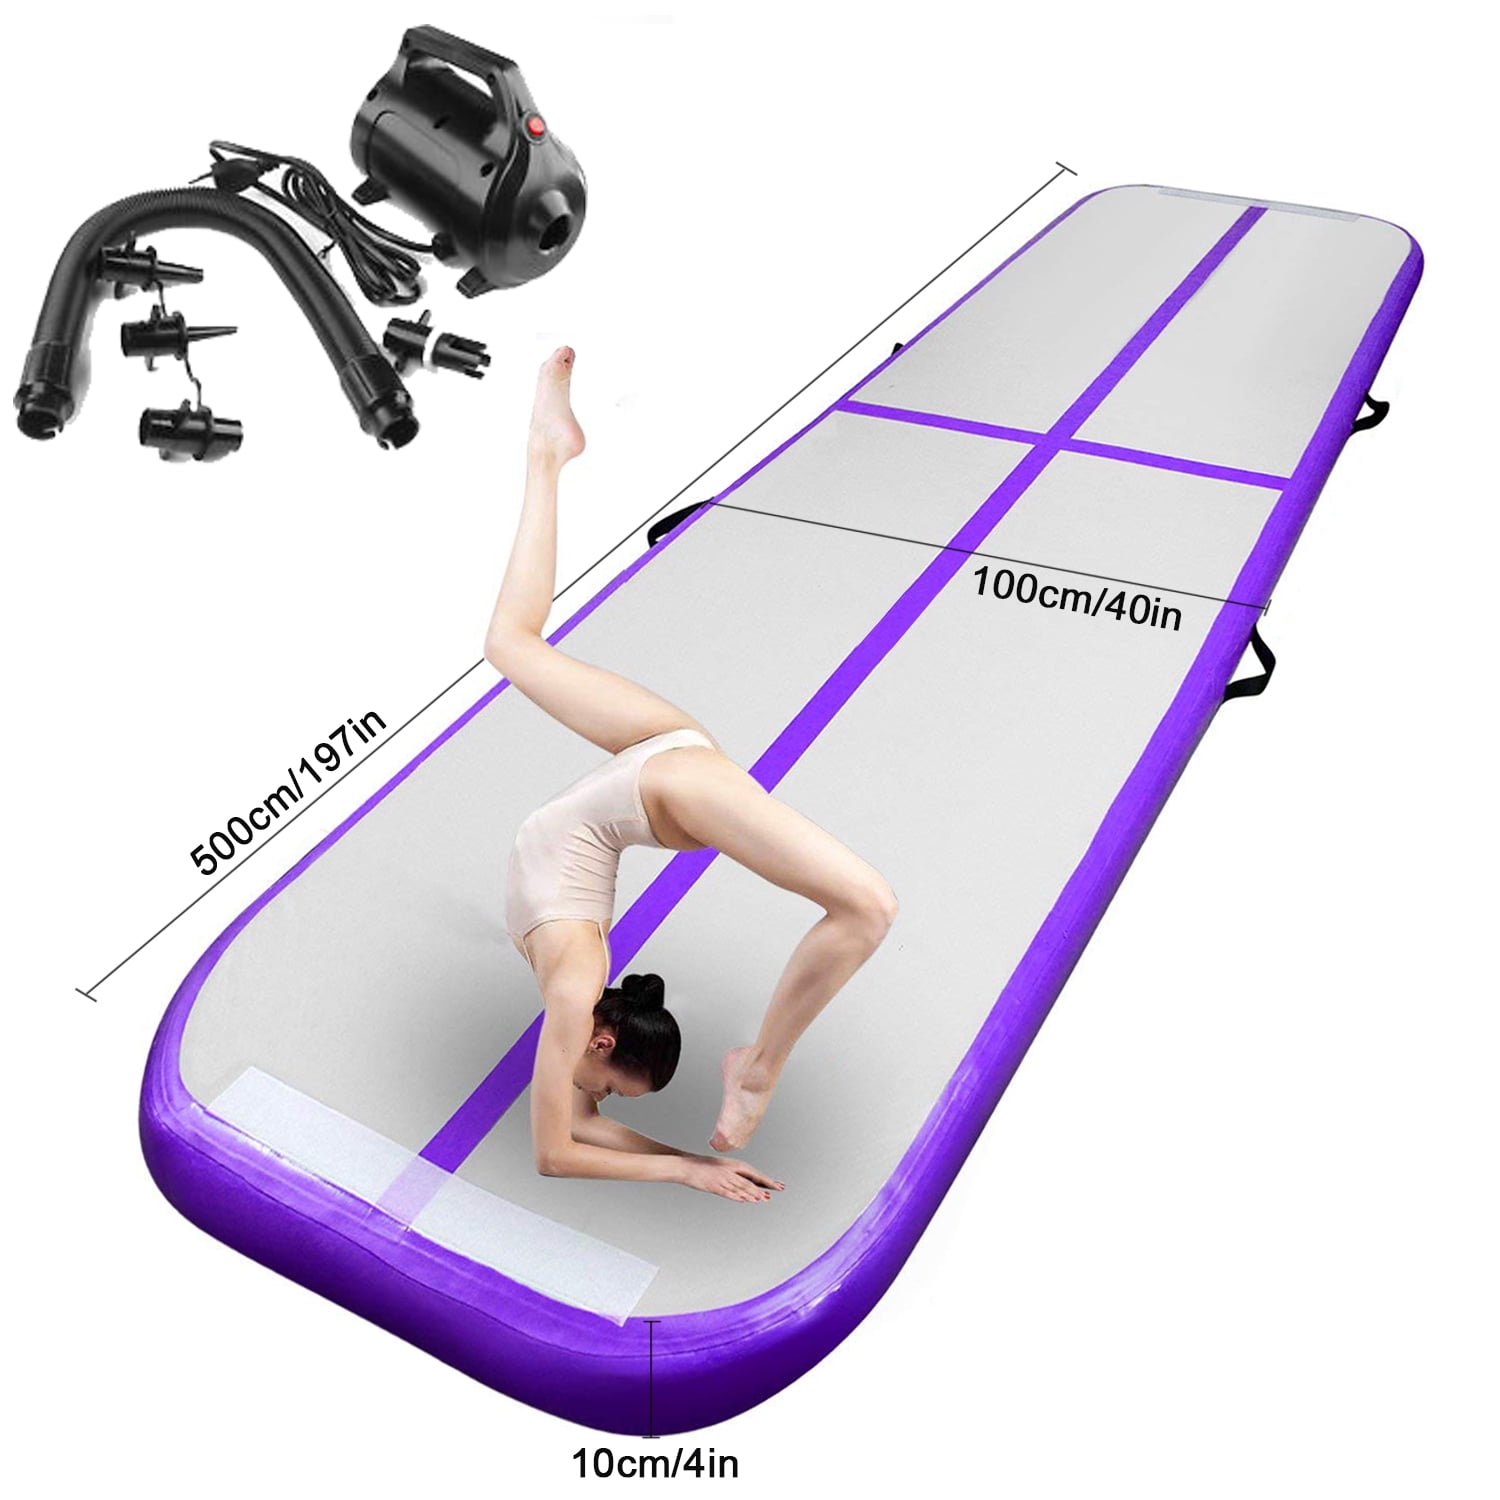 Fbsport 3-8m Inflatable Air Track Gymnastics Yoga Tumbling Mat Training+Pump 